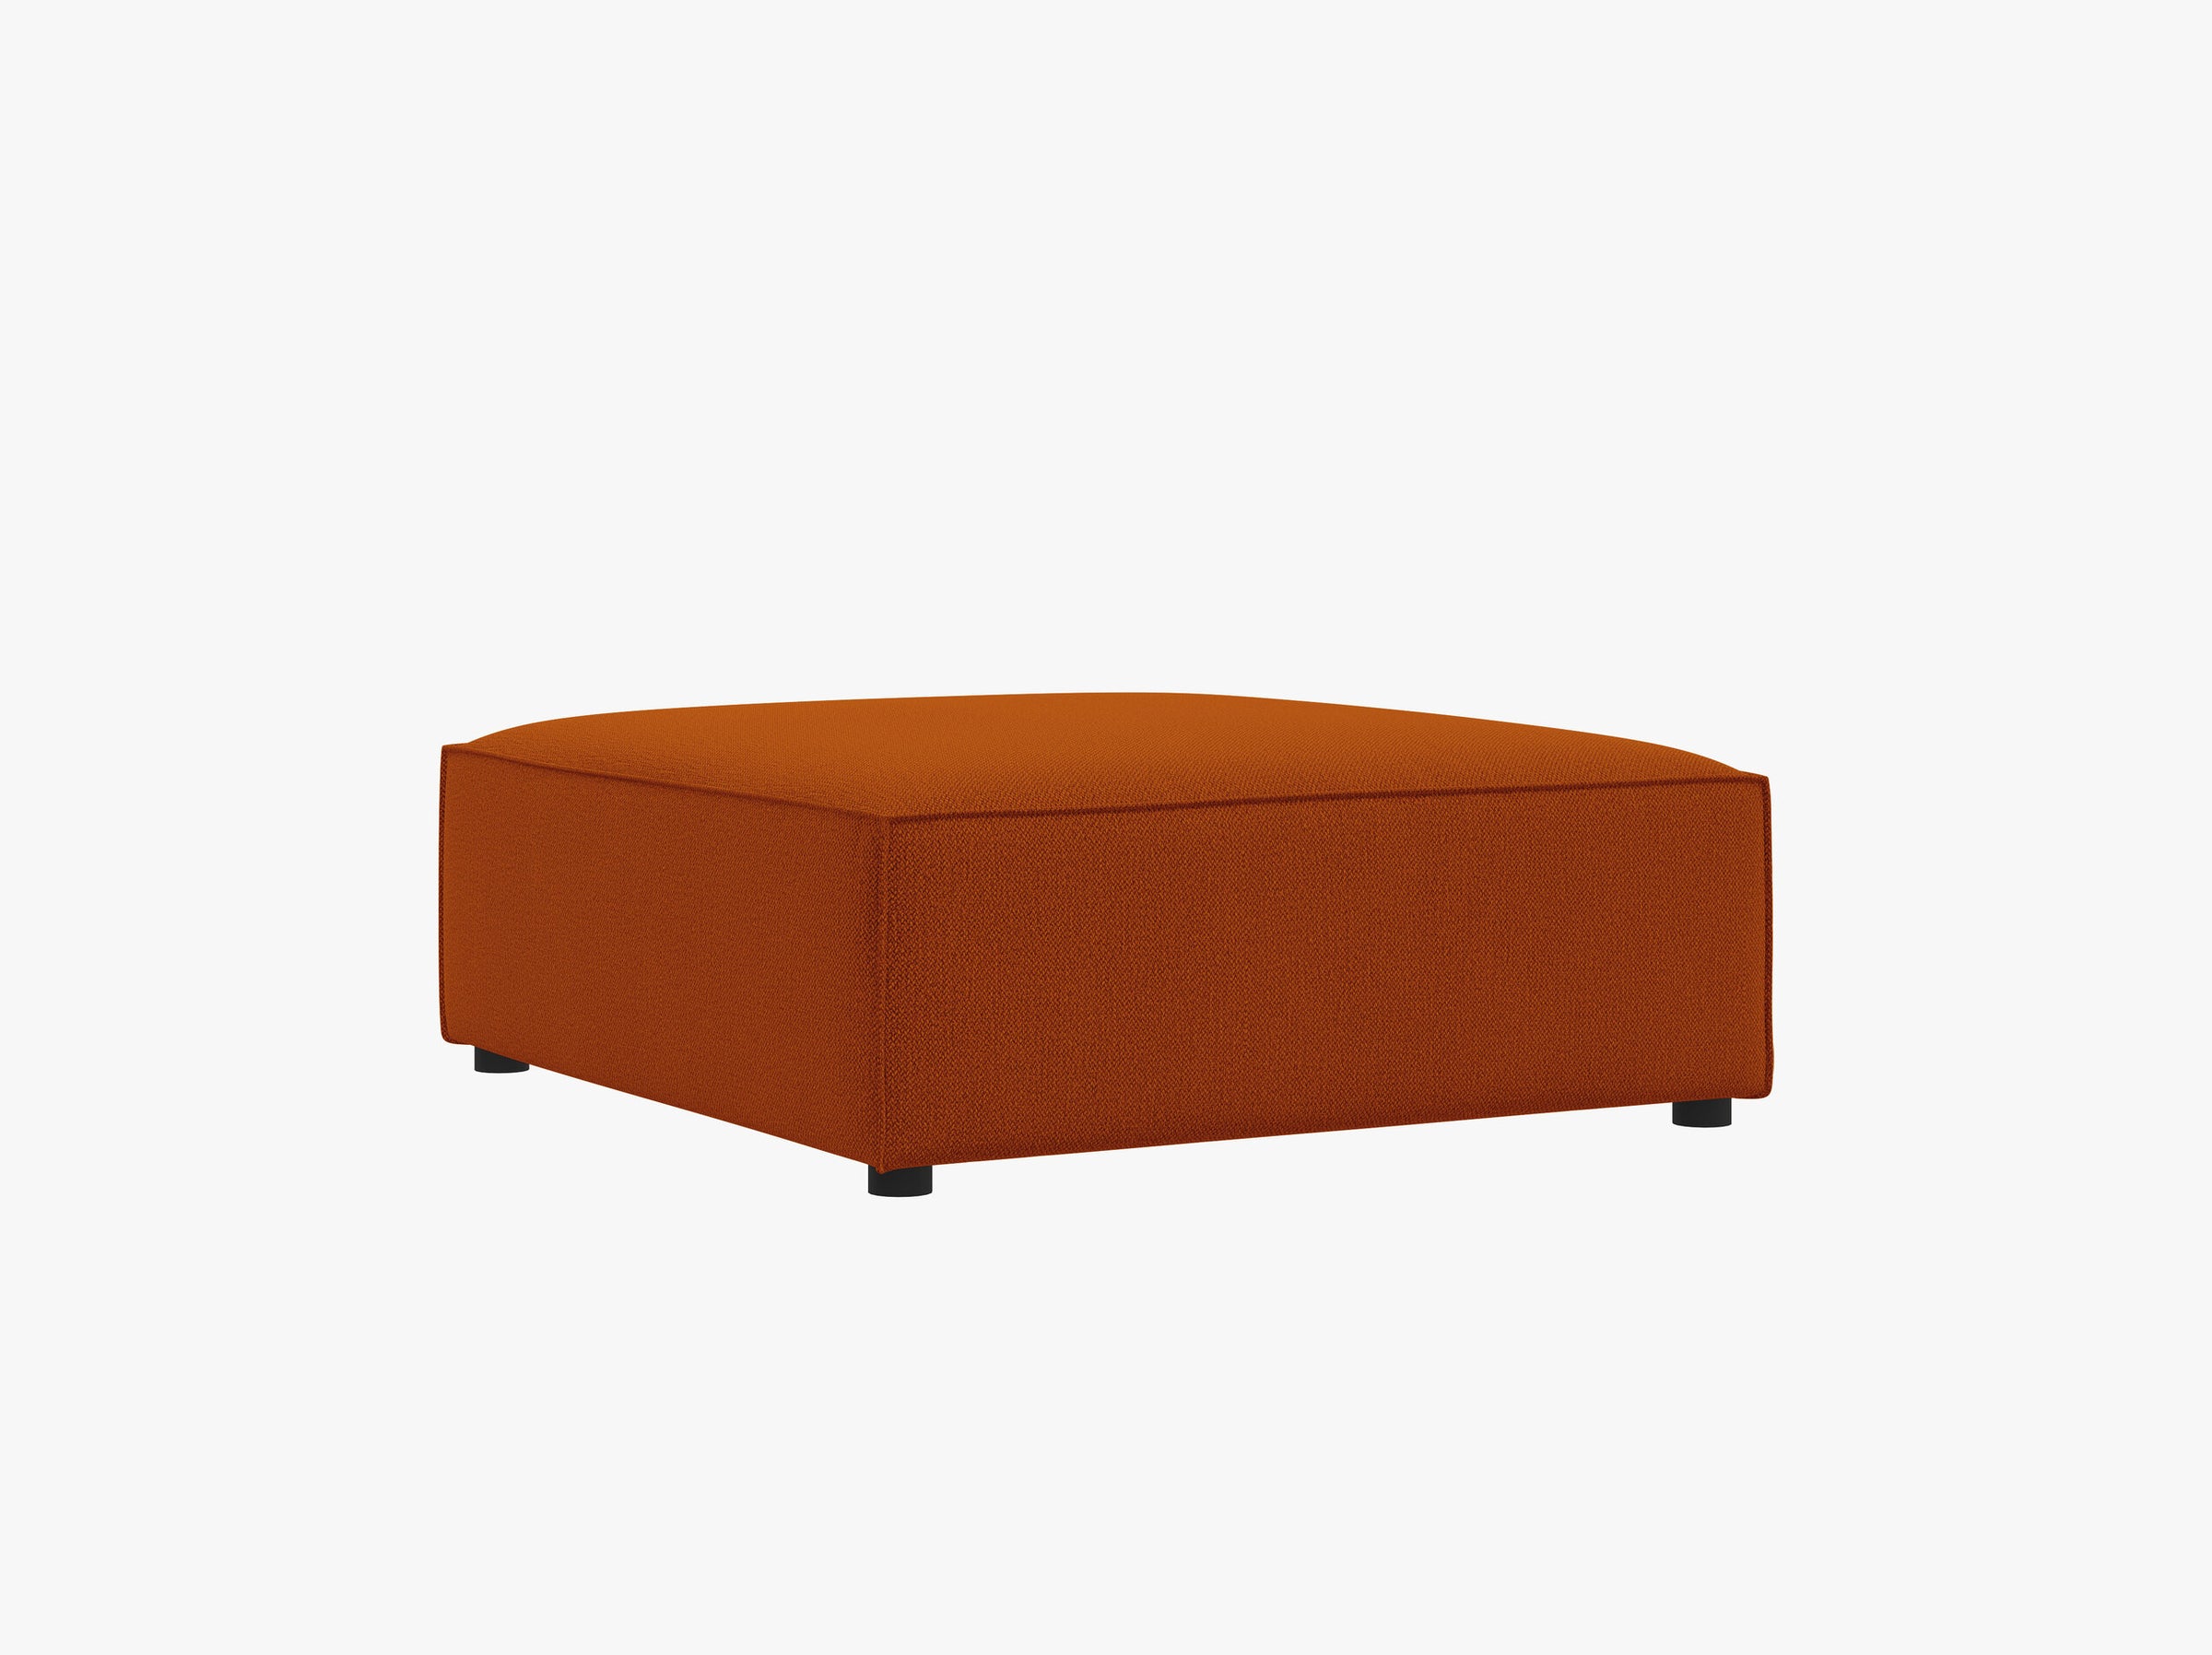 Jodie sofas structured fabric terracotta